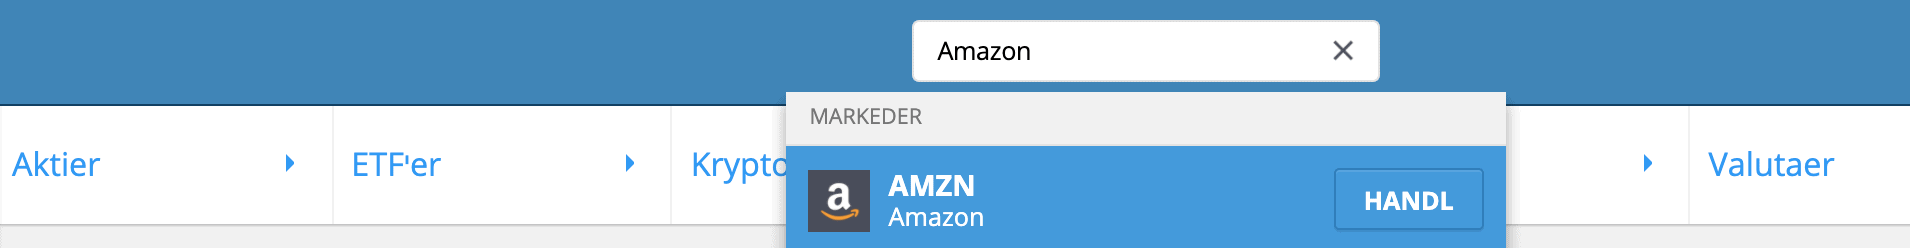 Soeg Amazon Aktier